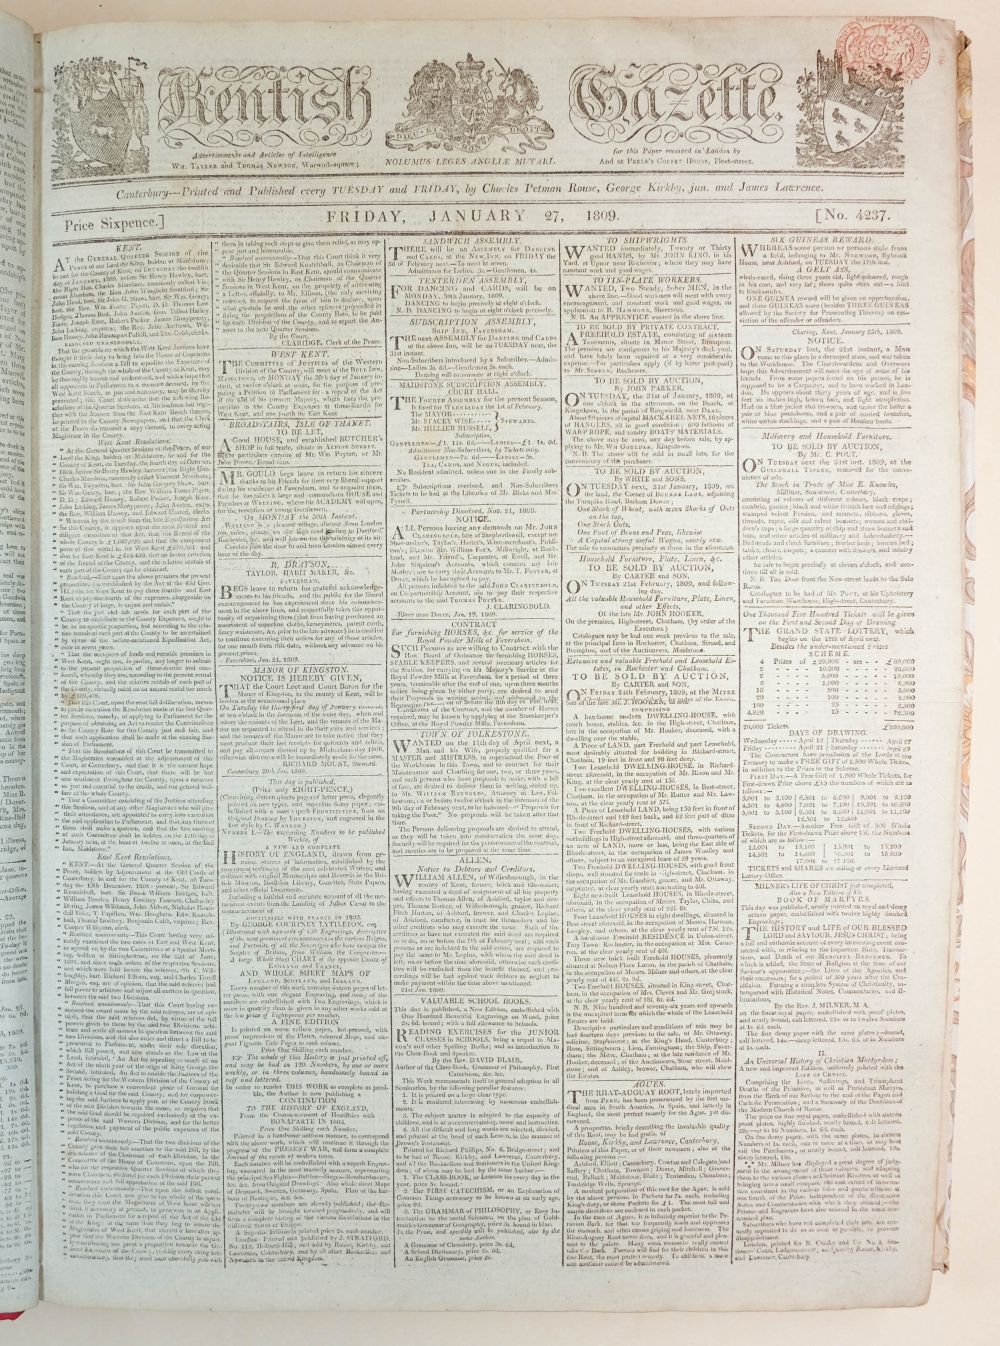 Kentish Gazette, 1809